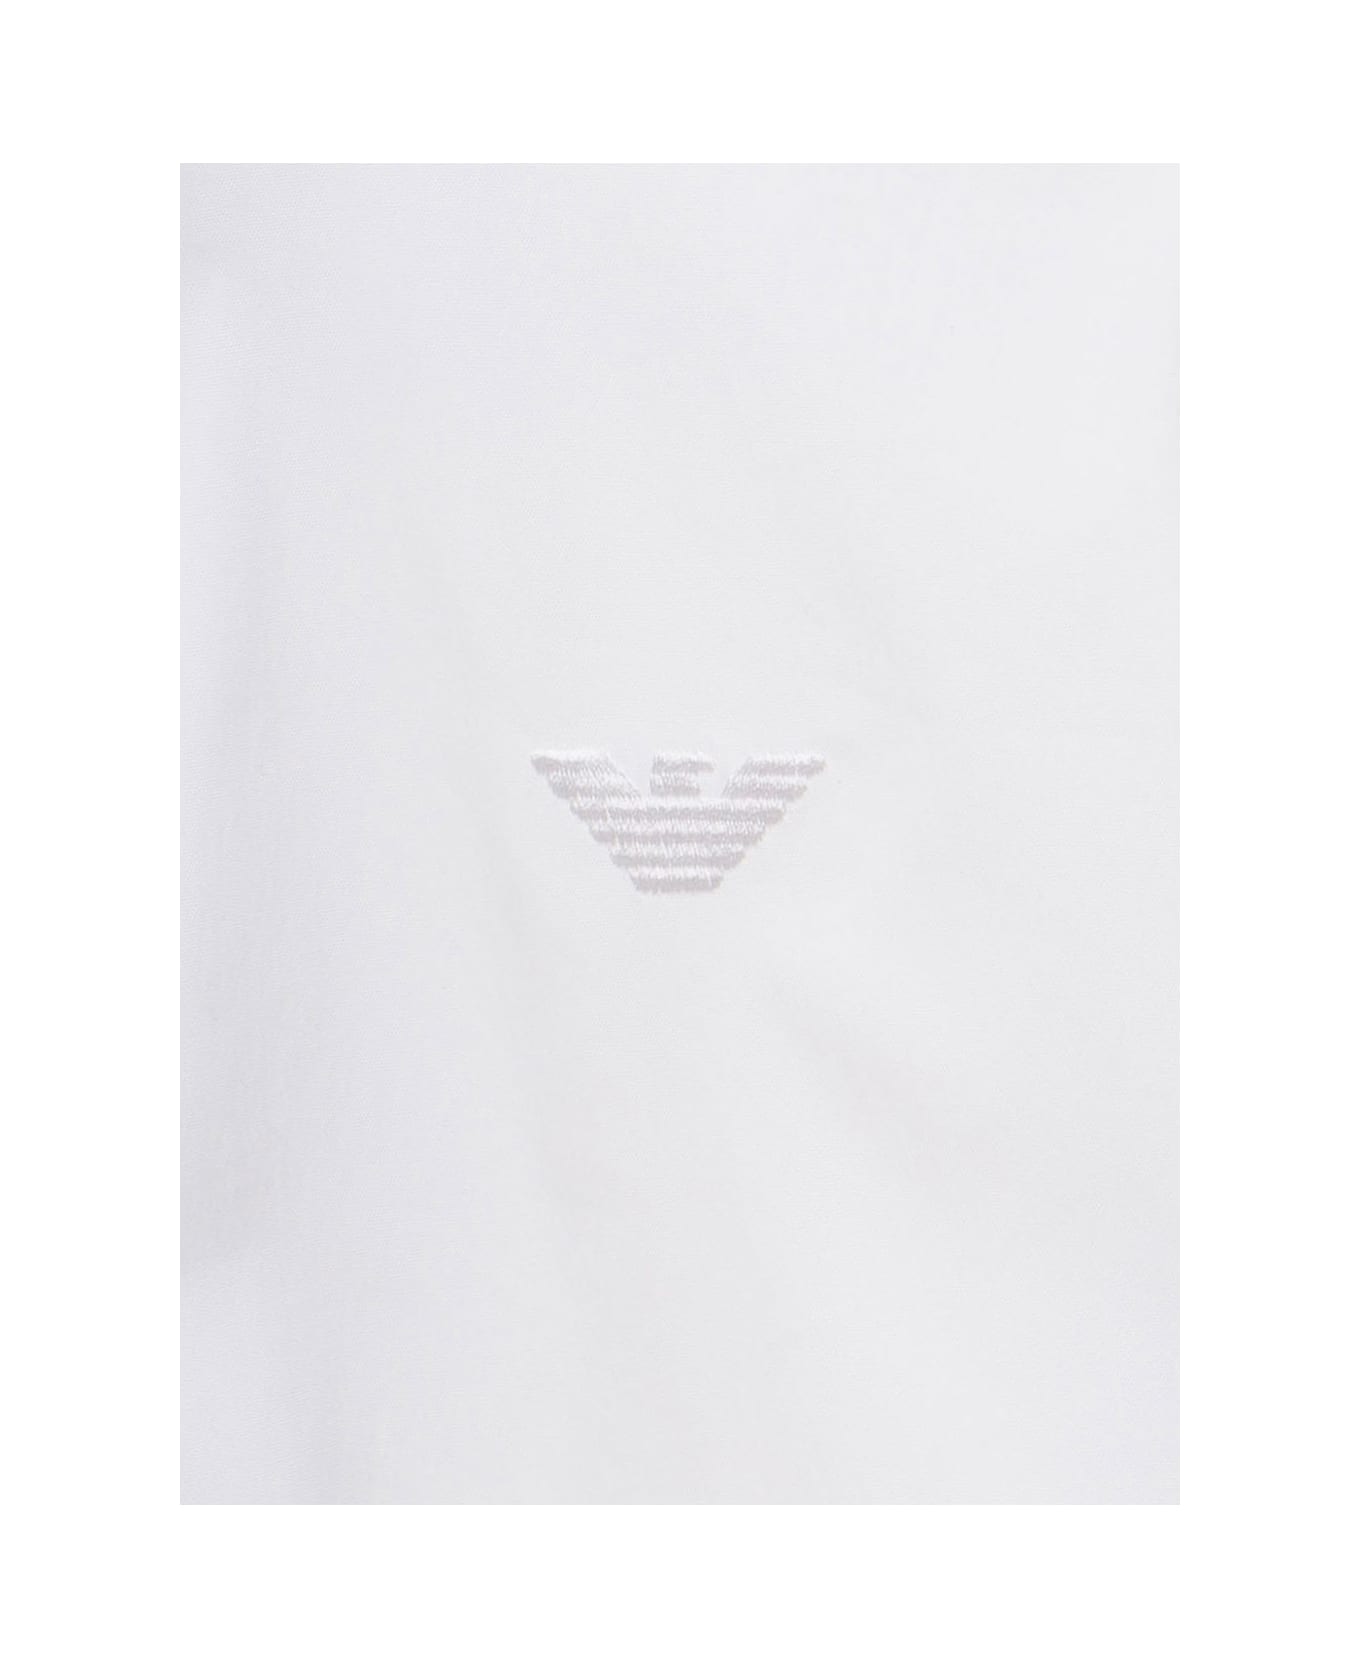 Emporio Armani White Shirt With Tonal Logo Embroidery In Stretch Cotton Blend Boy - White